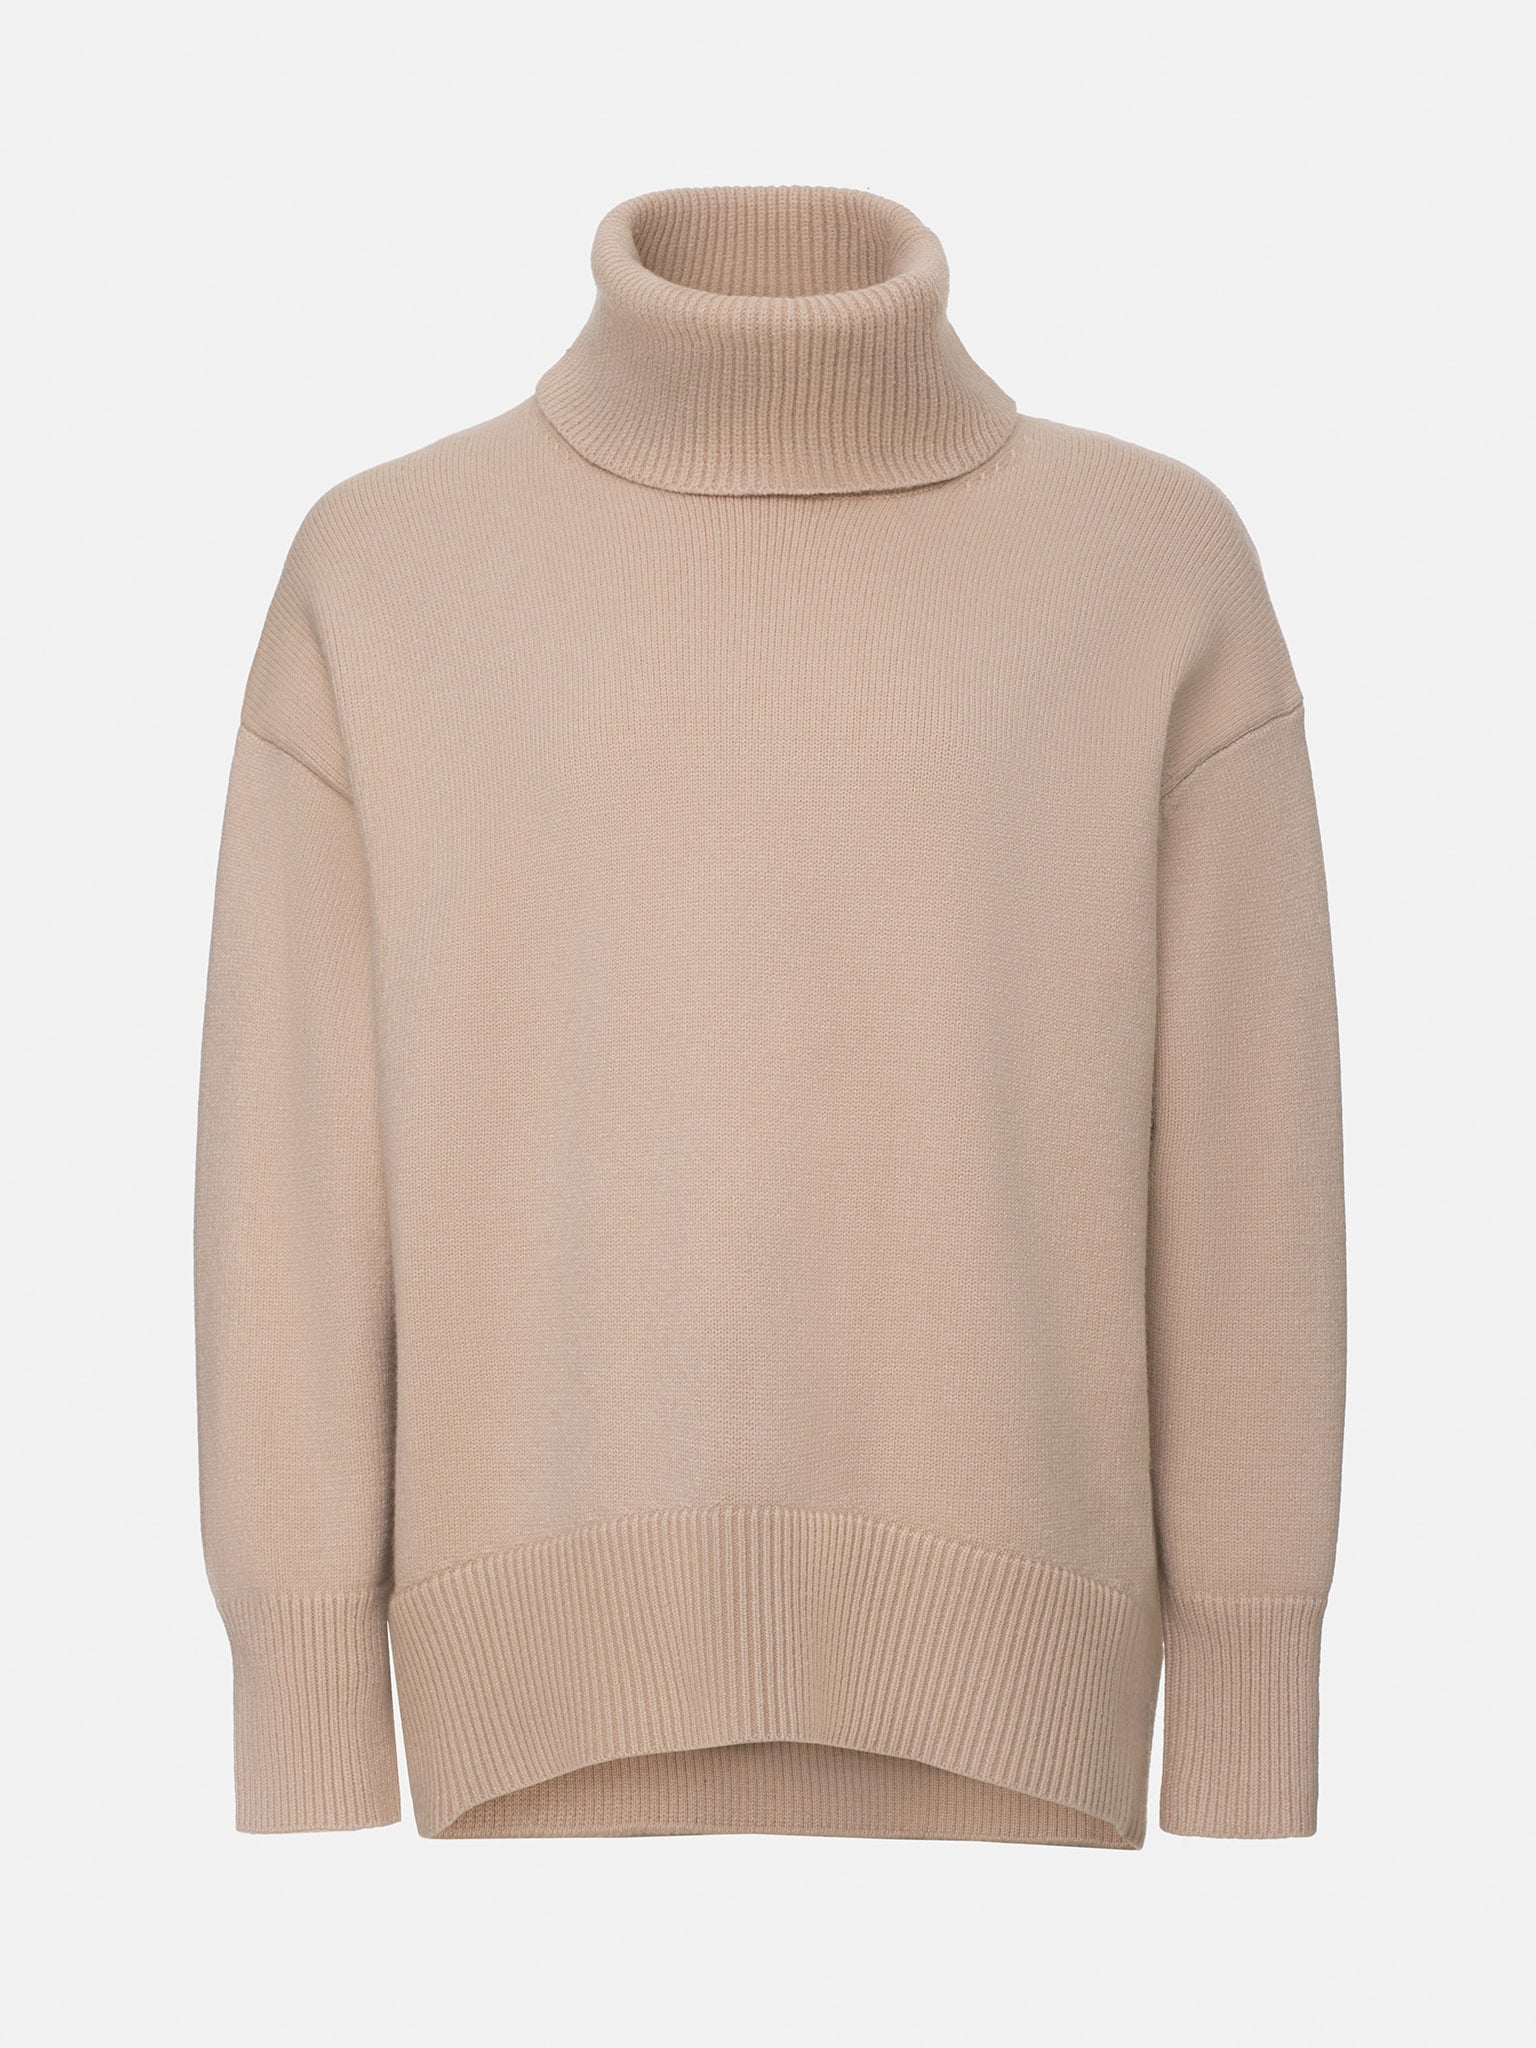 Oversized knitted turtleneck sweater :: LICHI - Online fashion store